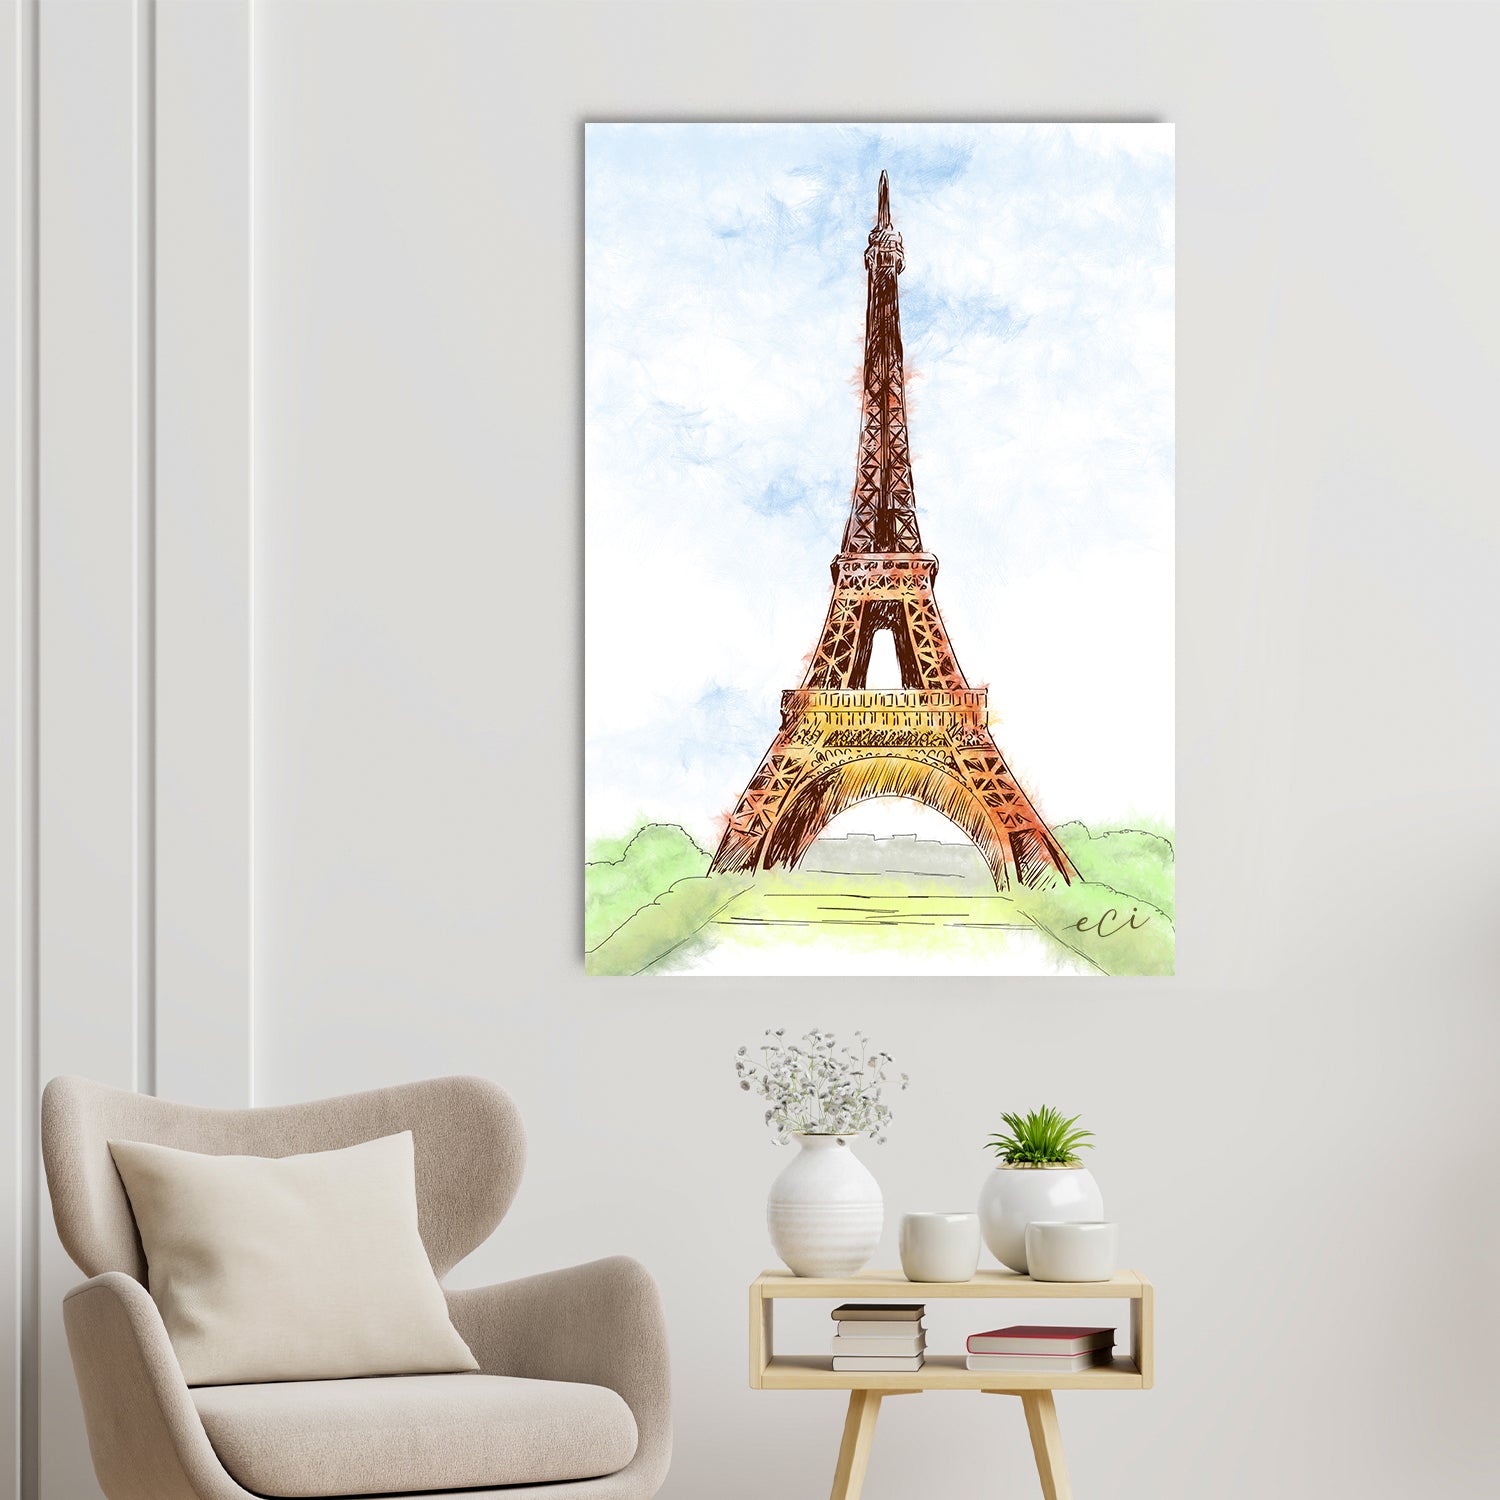 Paris Famous Eiffel Tower Painting Digital Printed Canvas Wall Art